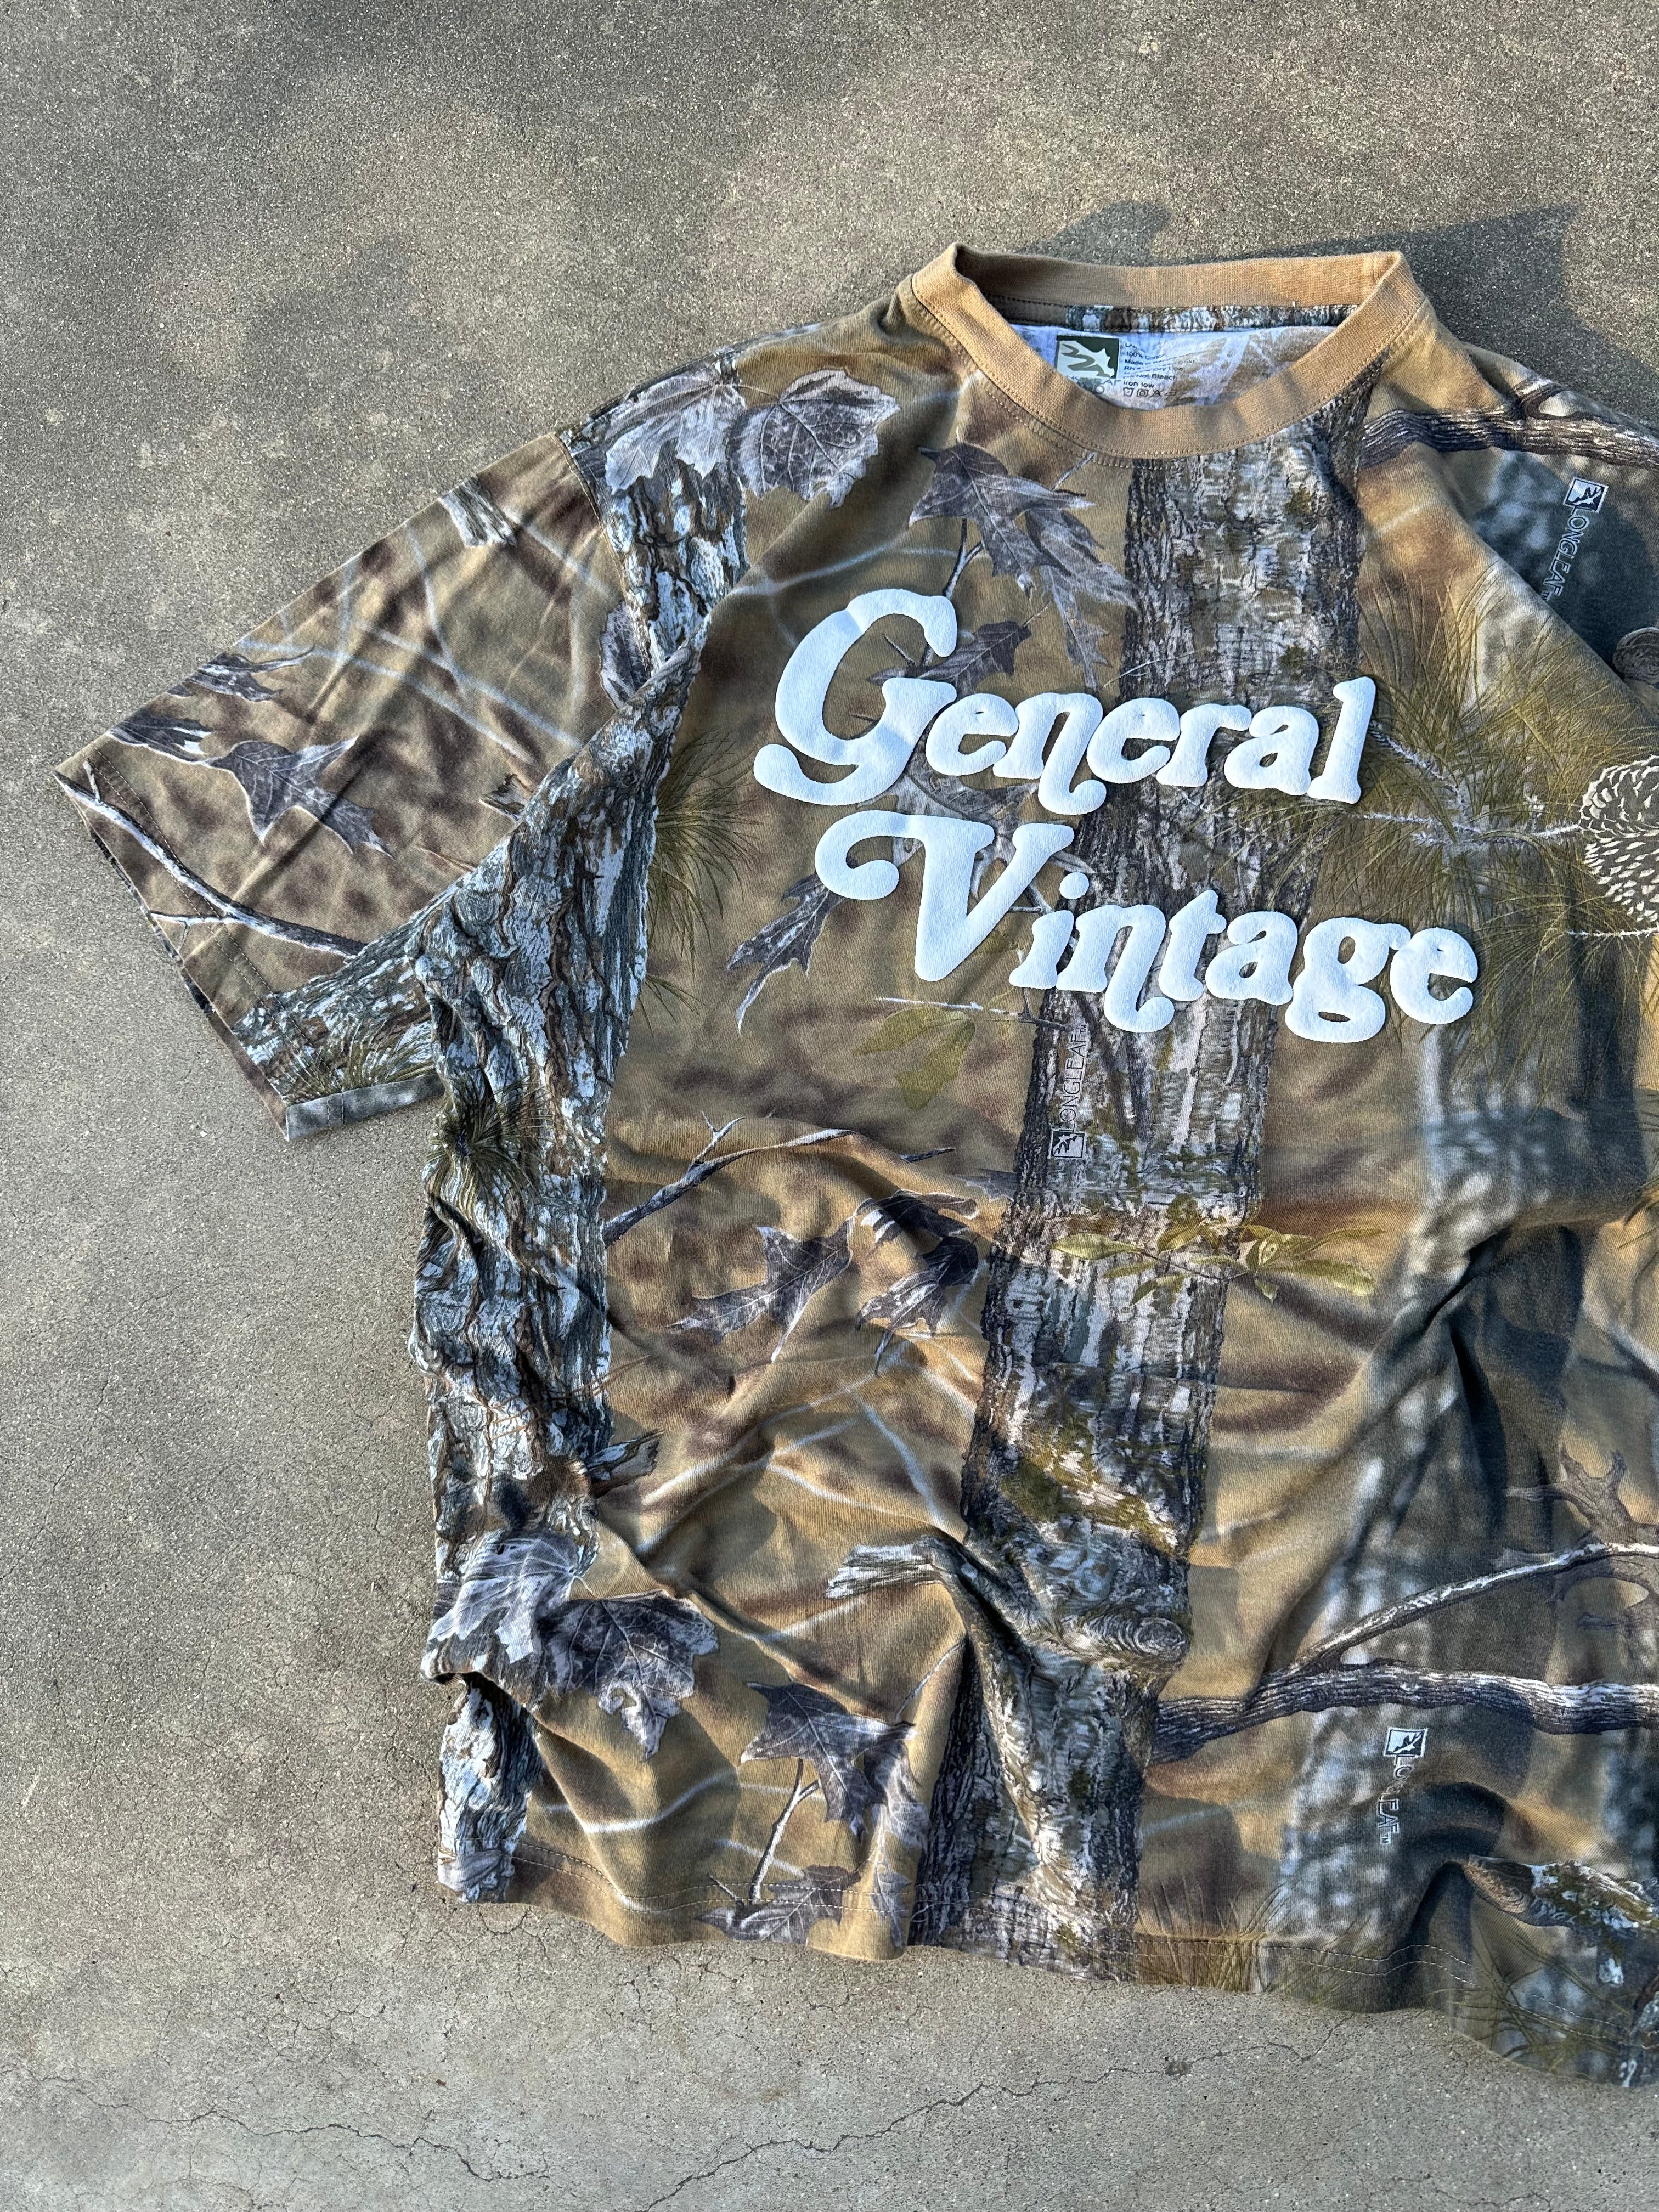 General Vintage Camo Puff Print T-Shirt